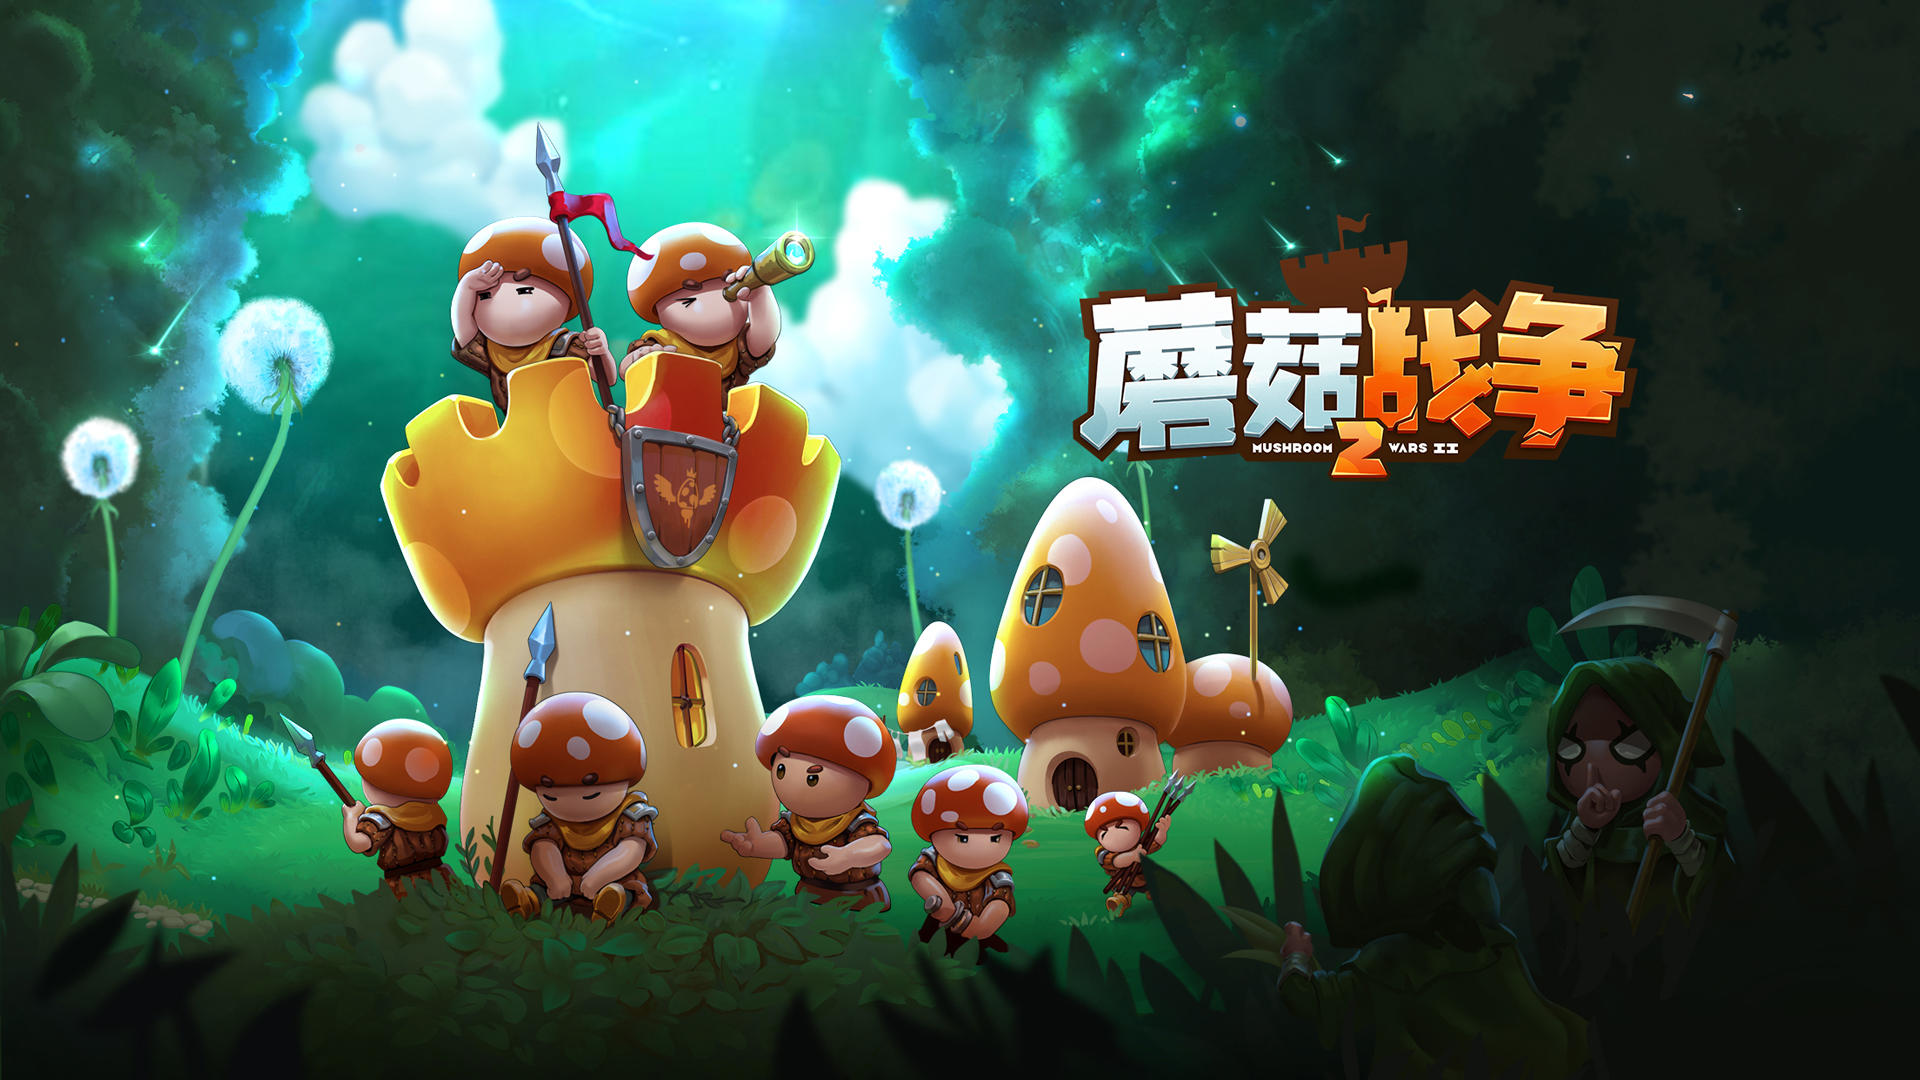 Banner of Mushroom Wars 2: 온라인 전쟁 게임 